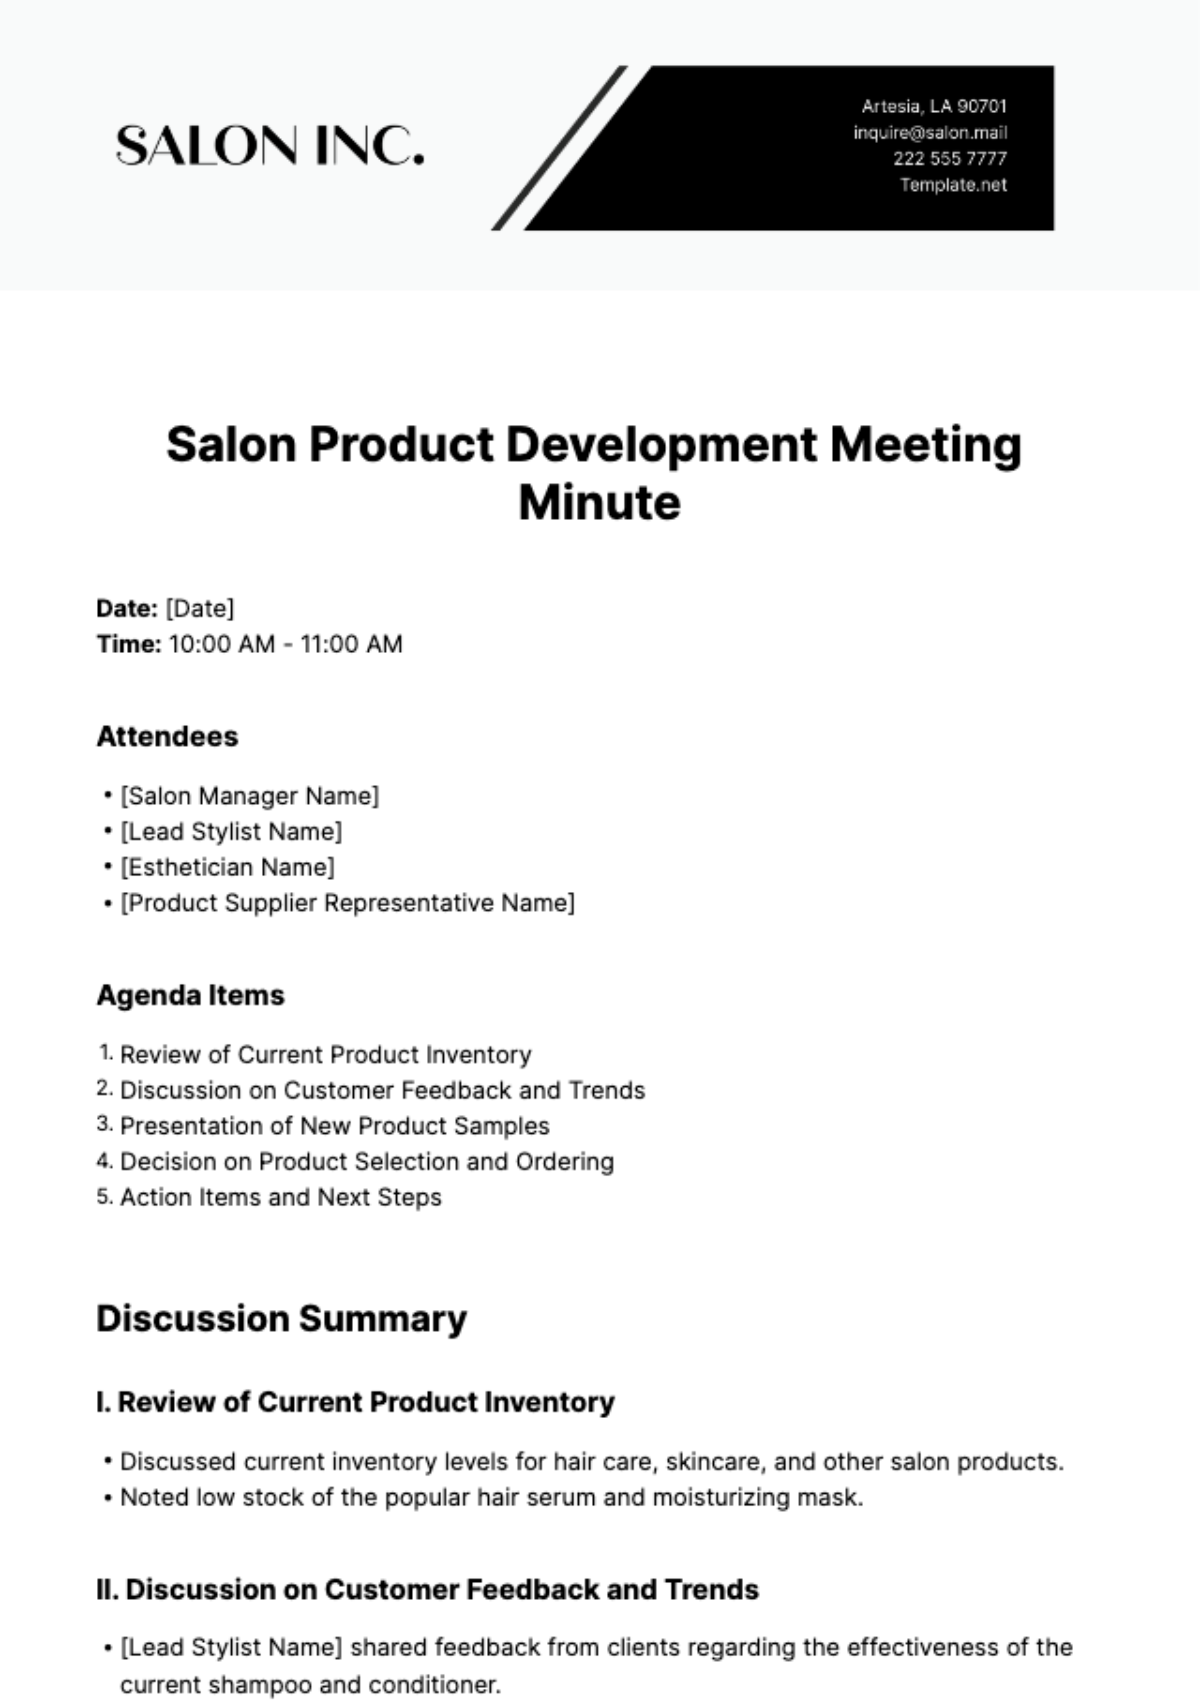 Free Salon Product Development Meeting Minute Template